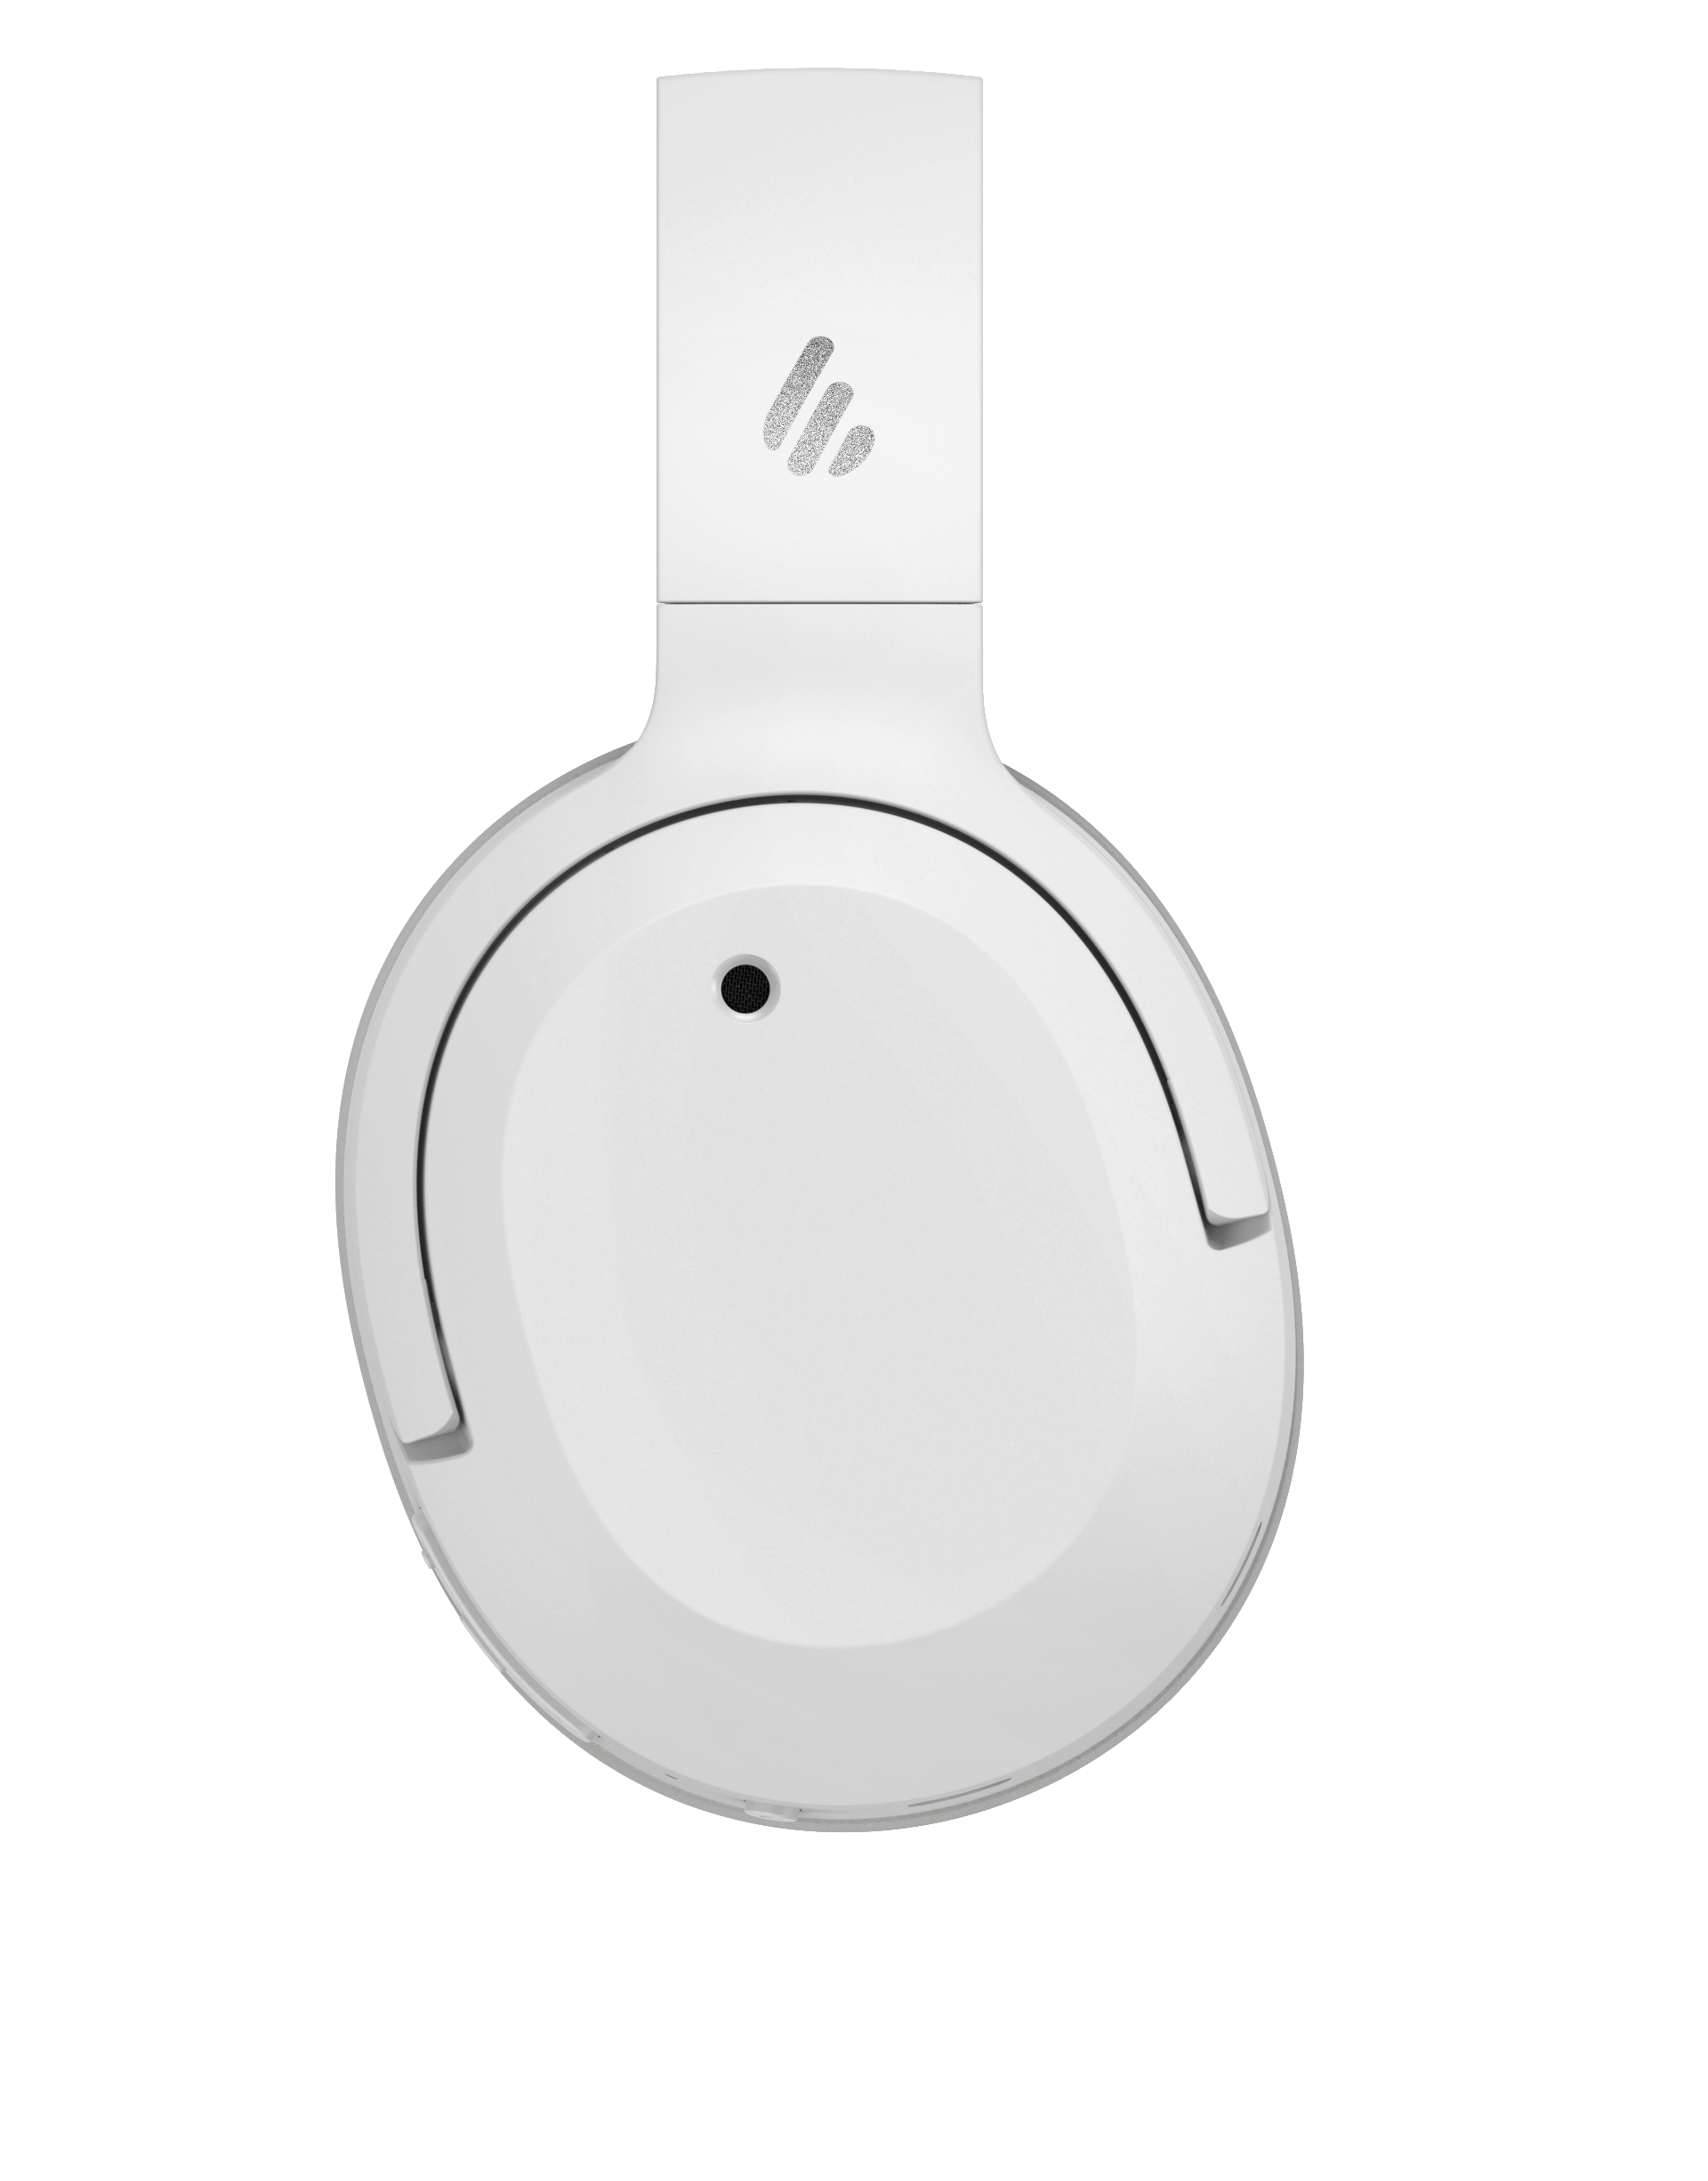 W820NB, Bluetooth Weiß EDIFIER Kopfhörer Over-ear